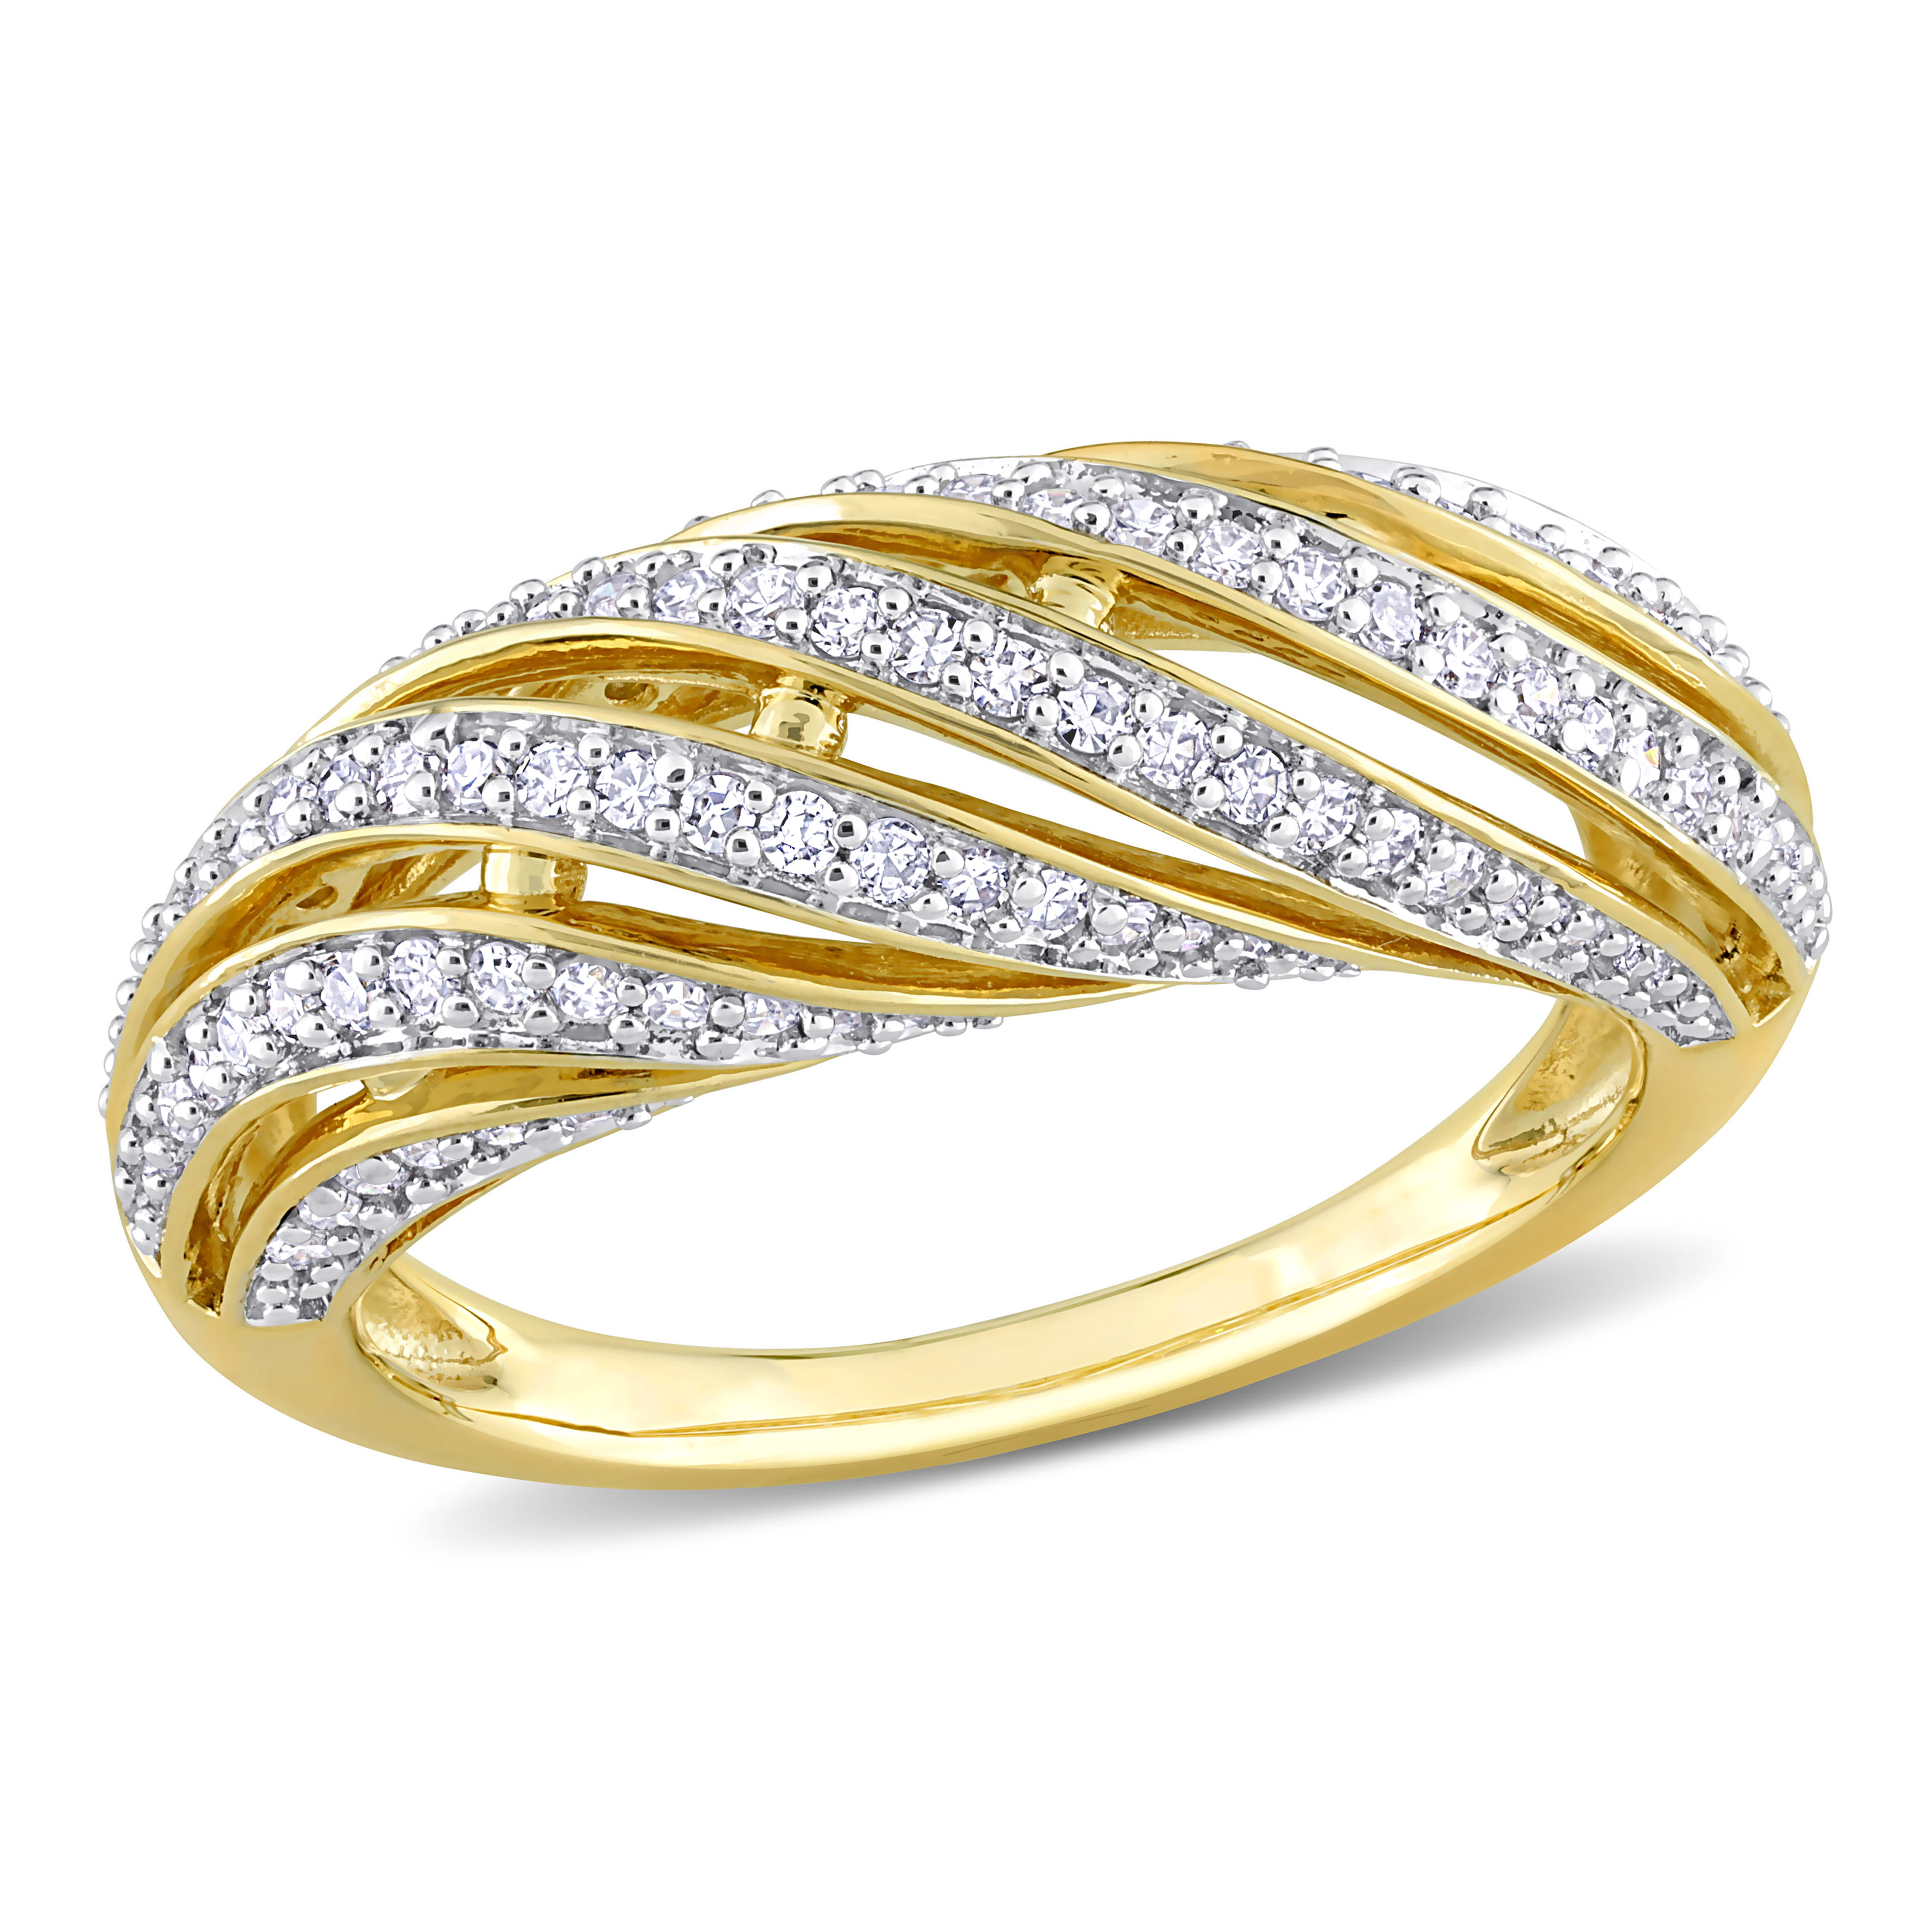 1/2 CT TDW Diamond Swirl Design Ring in 14k Yellow Gold